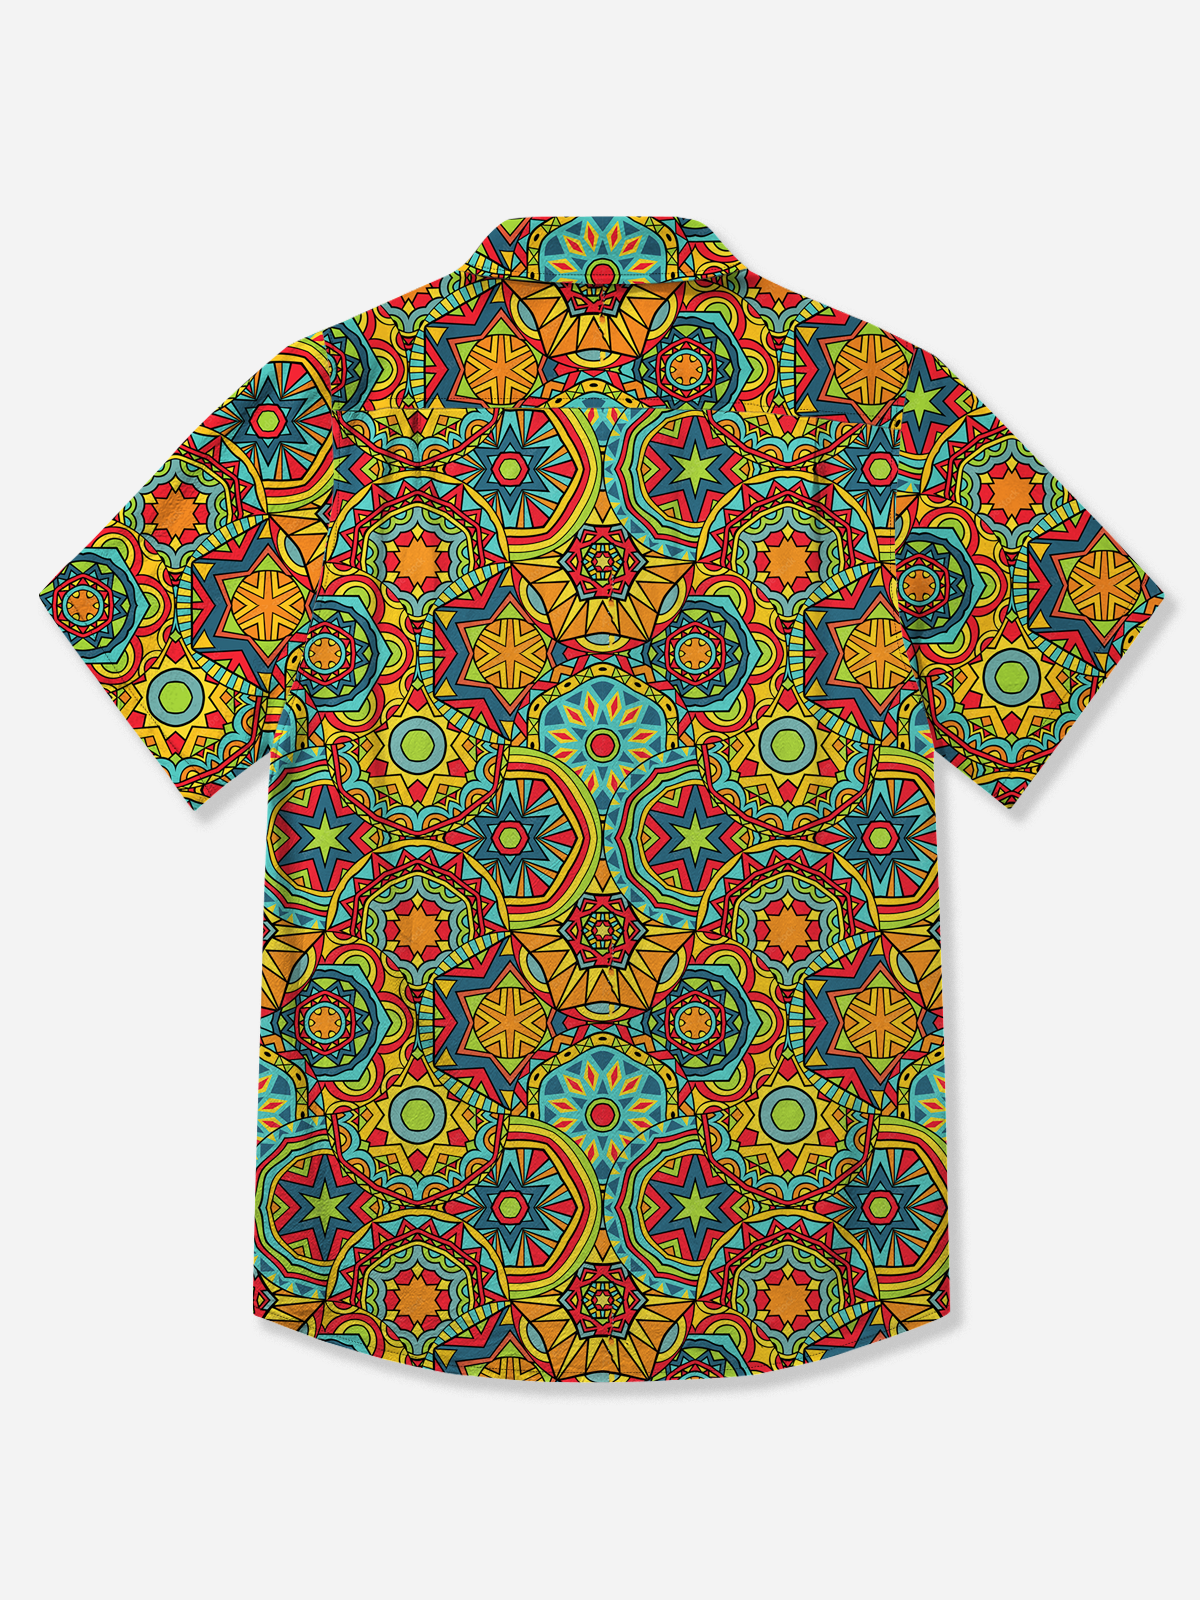 Hardaddy Cotton Ethnic Geometric Oxford Shirt